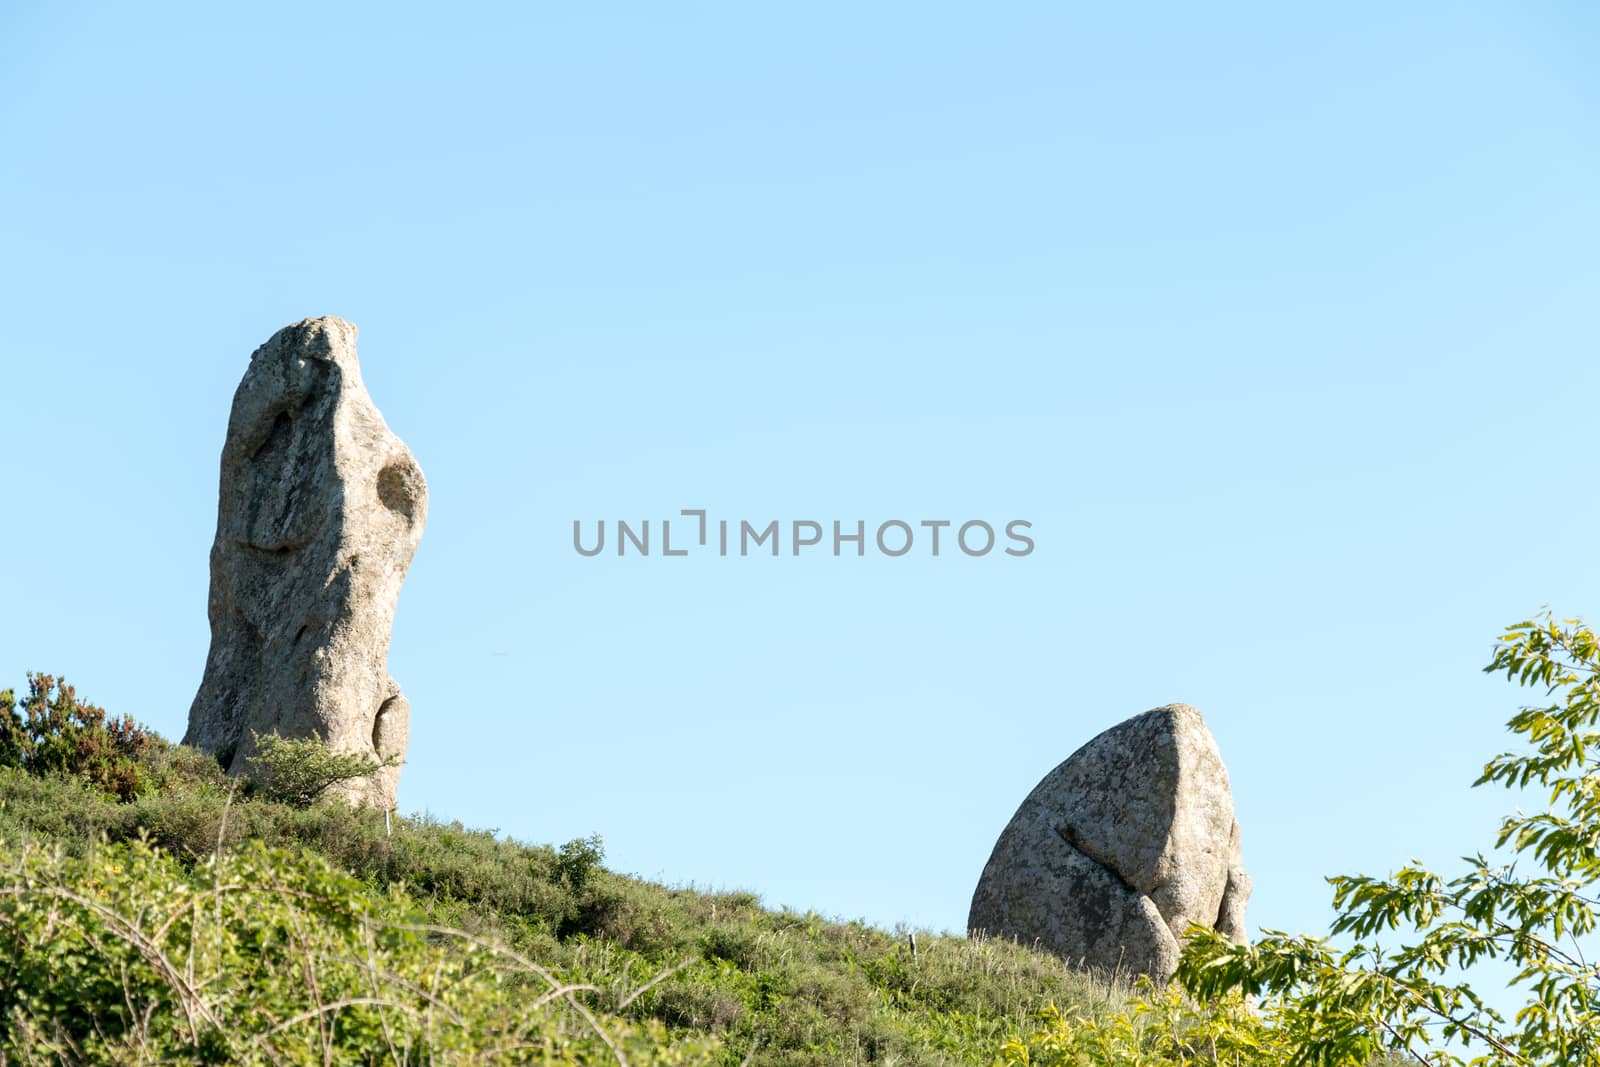 Megaliths in Montalbano Elicona Sicily